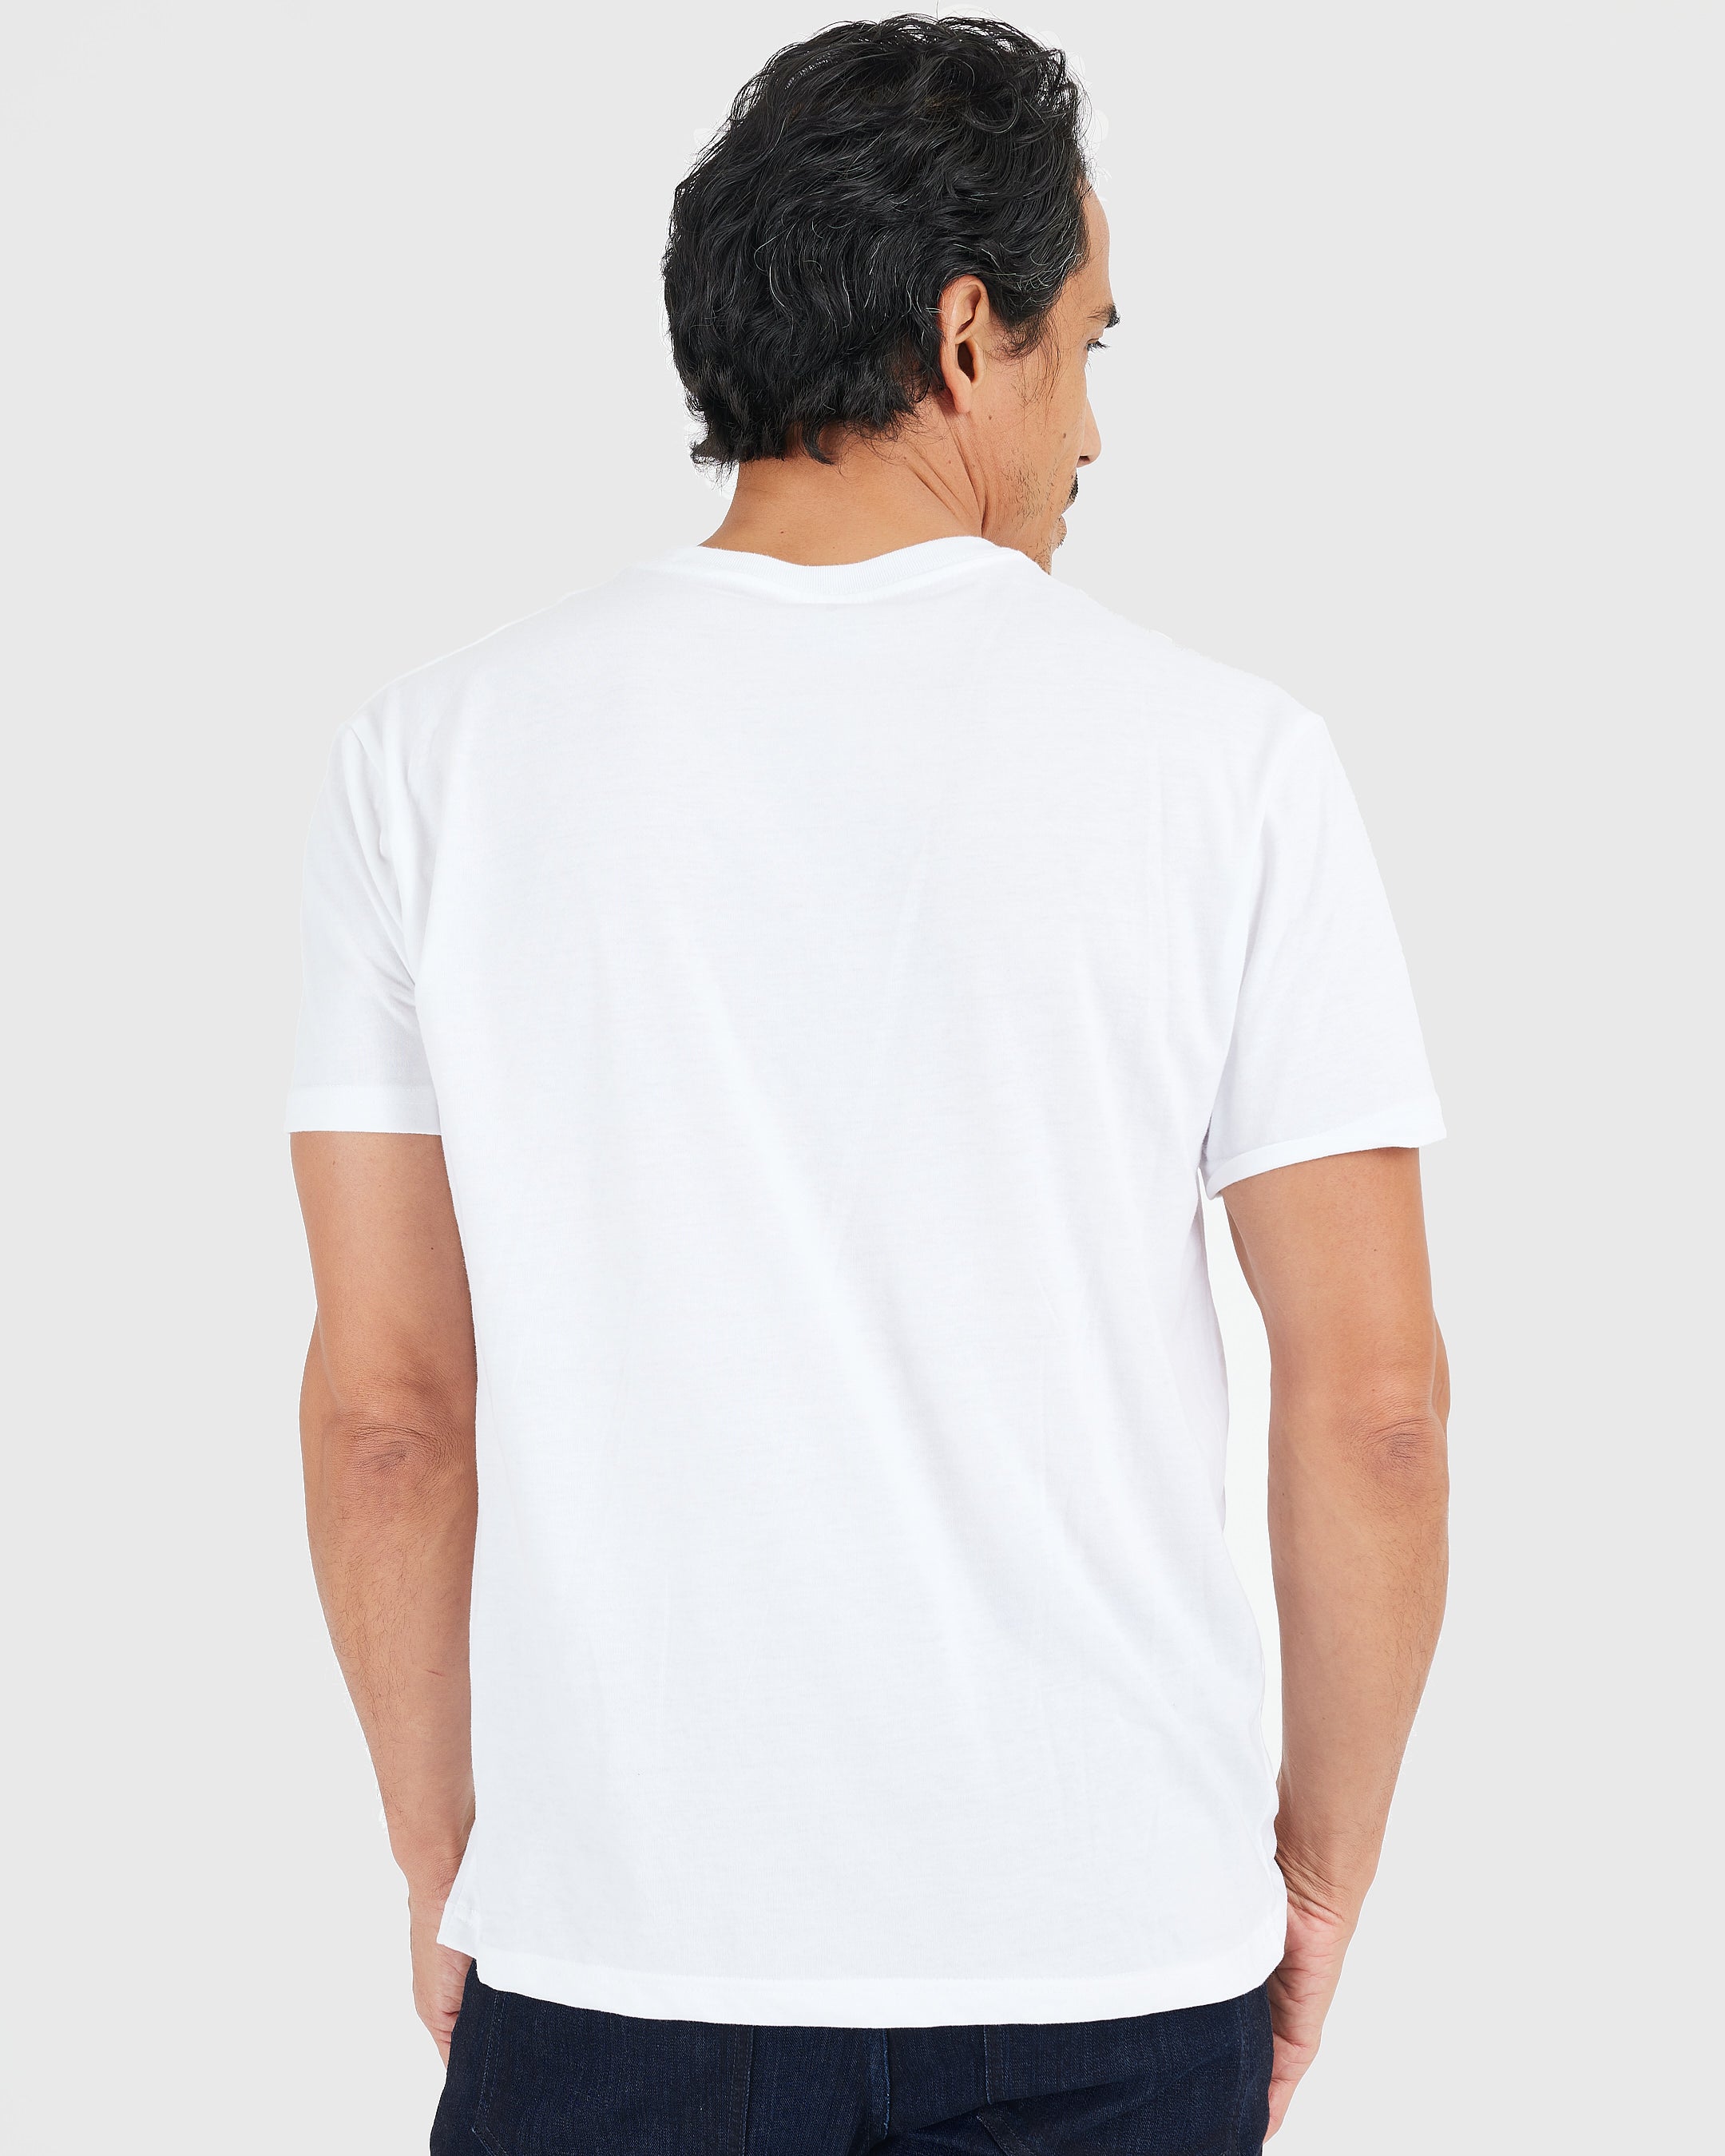 3 Pack White T-Shirts - True Classic